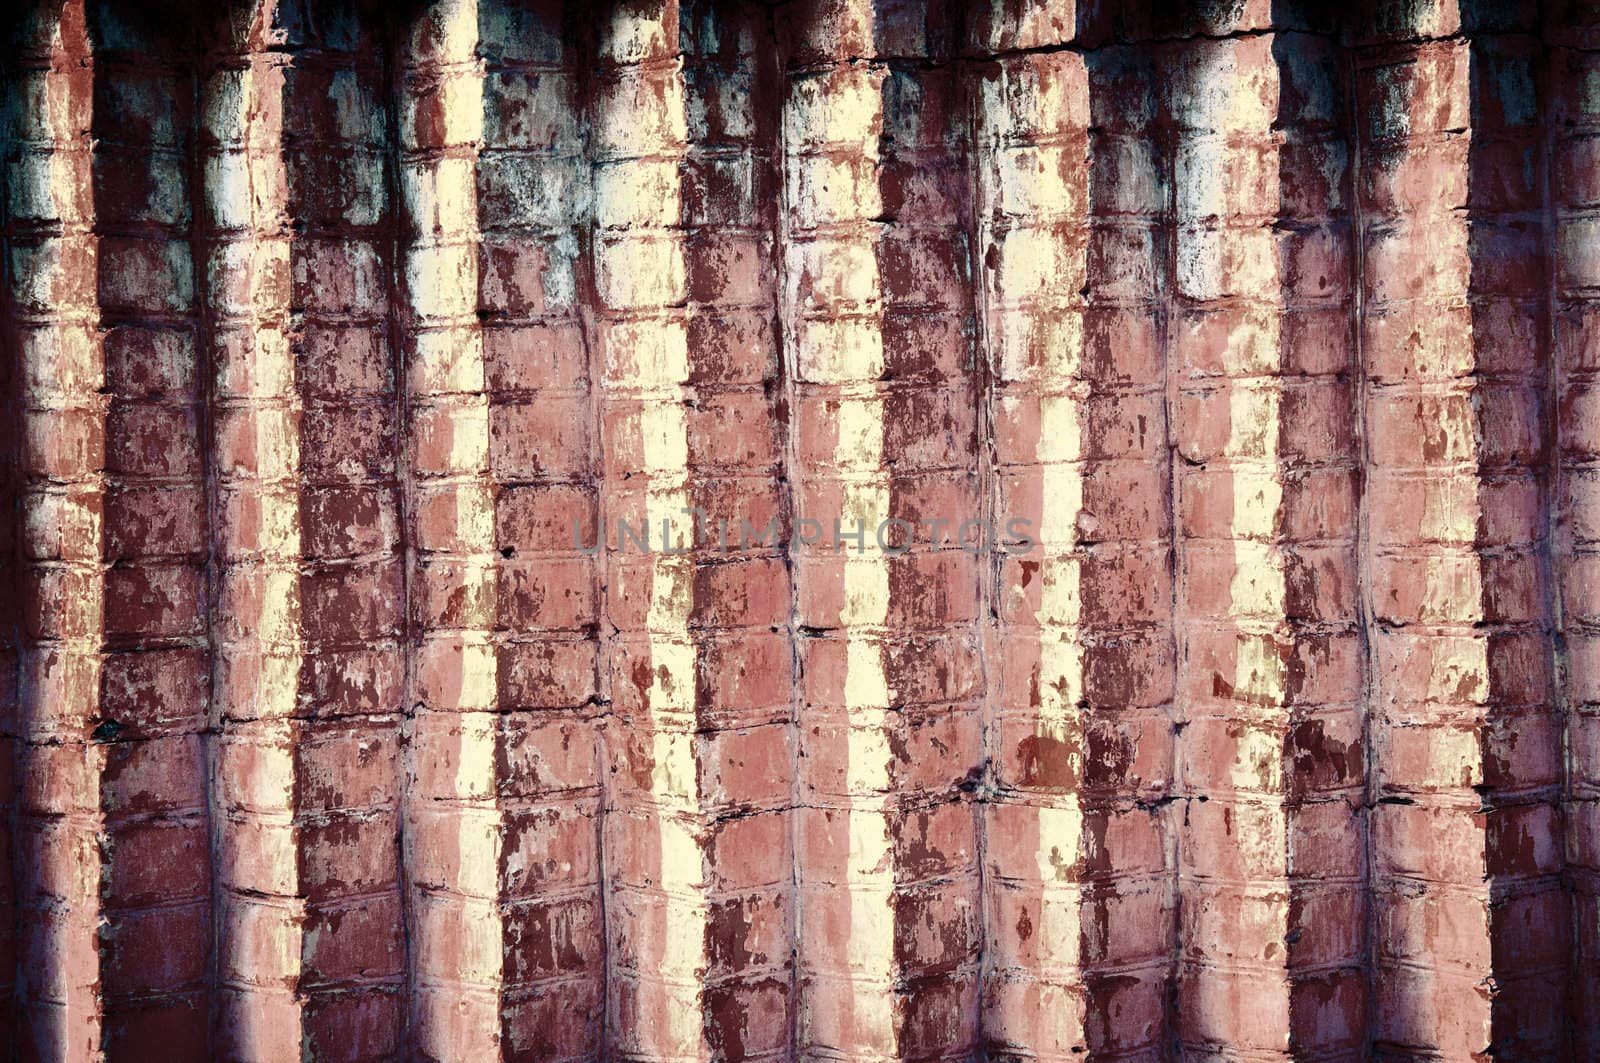 An angular brick wall by LeksusTuss